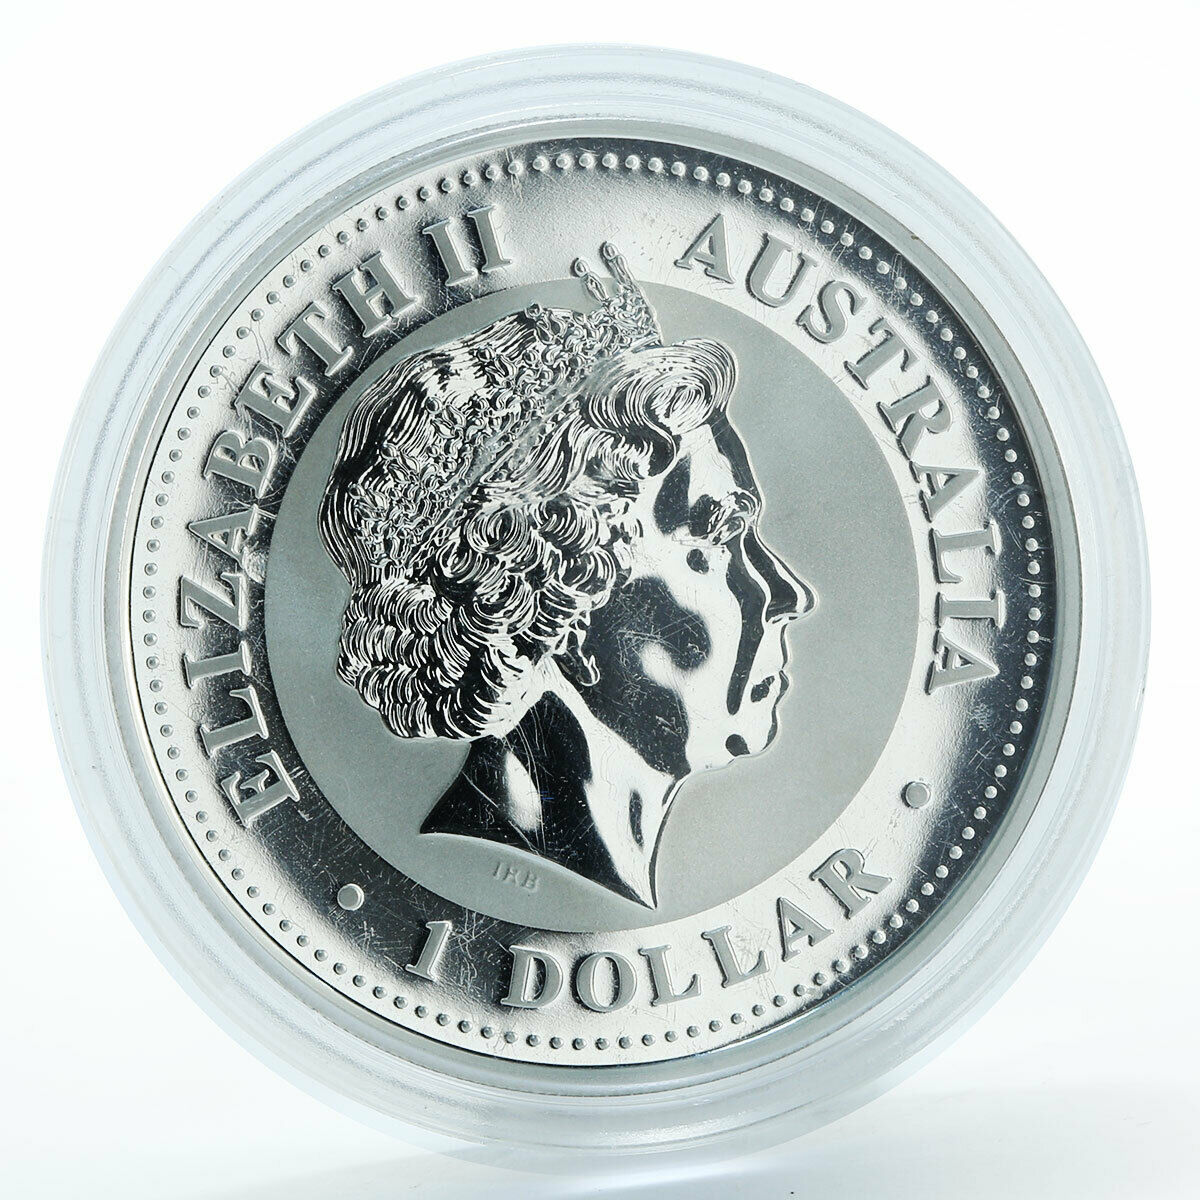 Australia $1 Year of the Monkey Lunar Series I 1 Oz Silver coin 2004